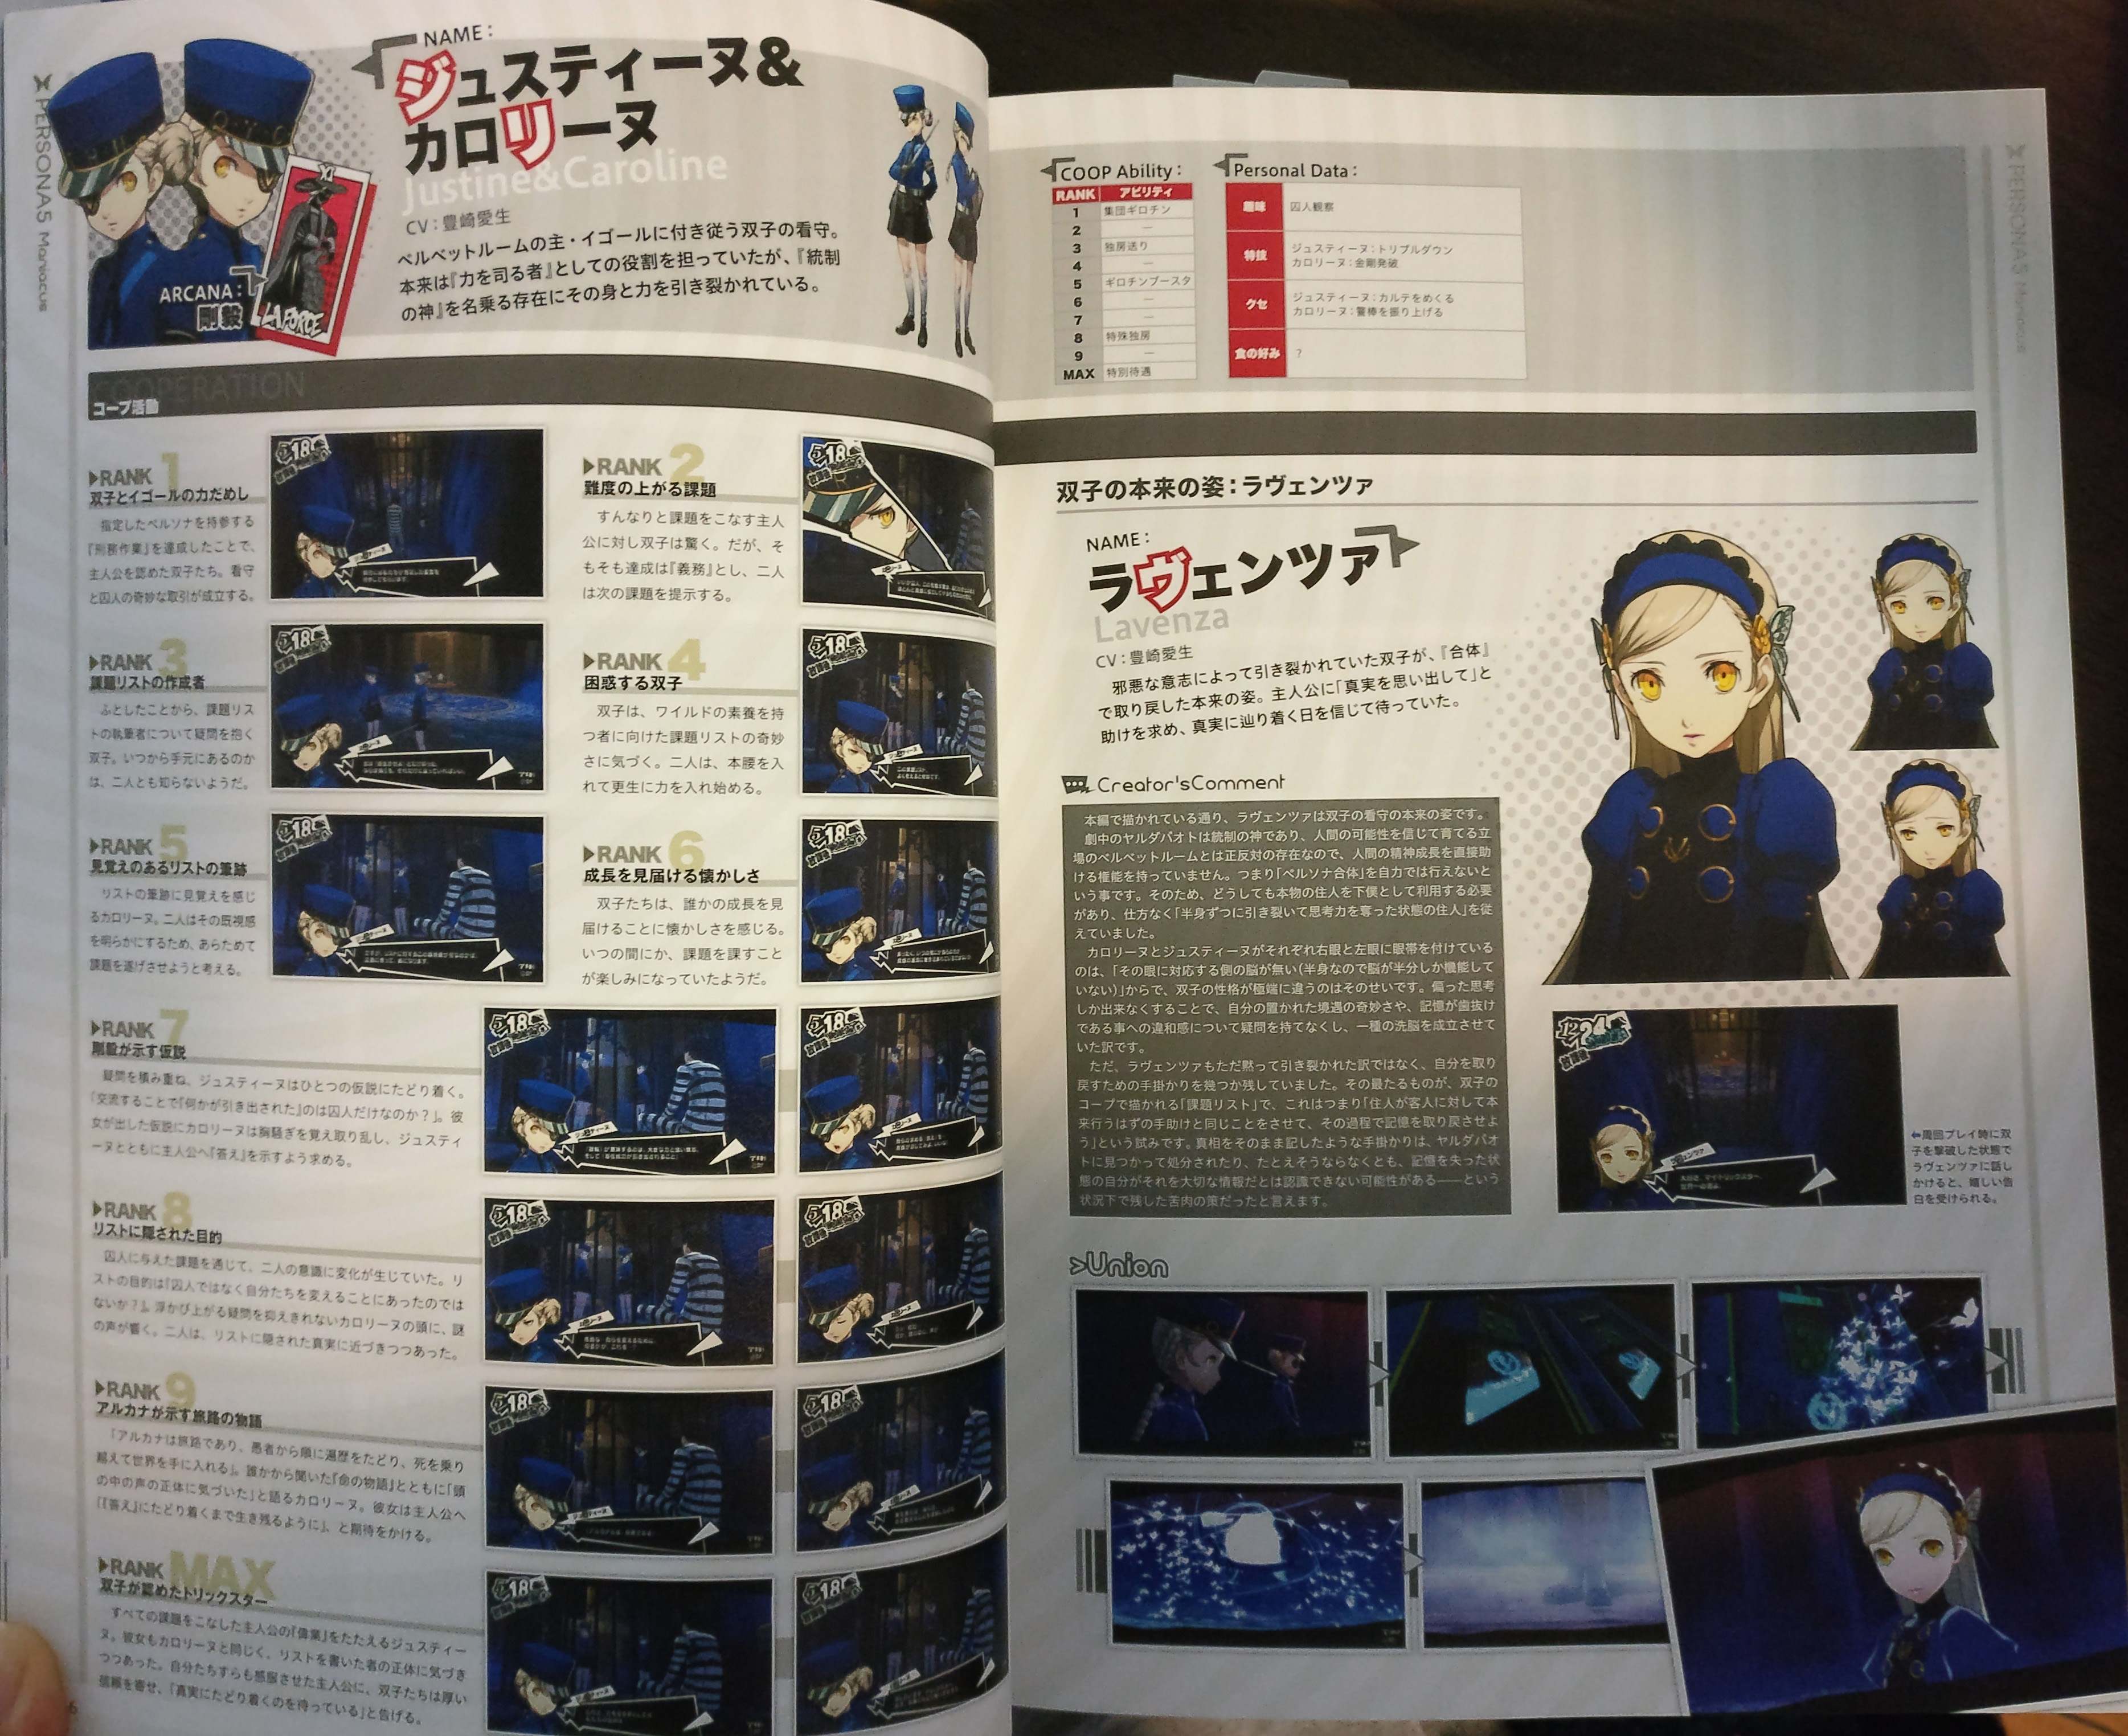 Persona 5 Royal Confidant Guide: Moon – Yuuki Mishima